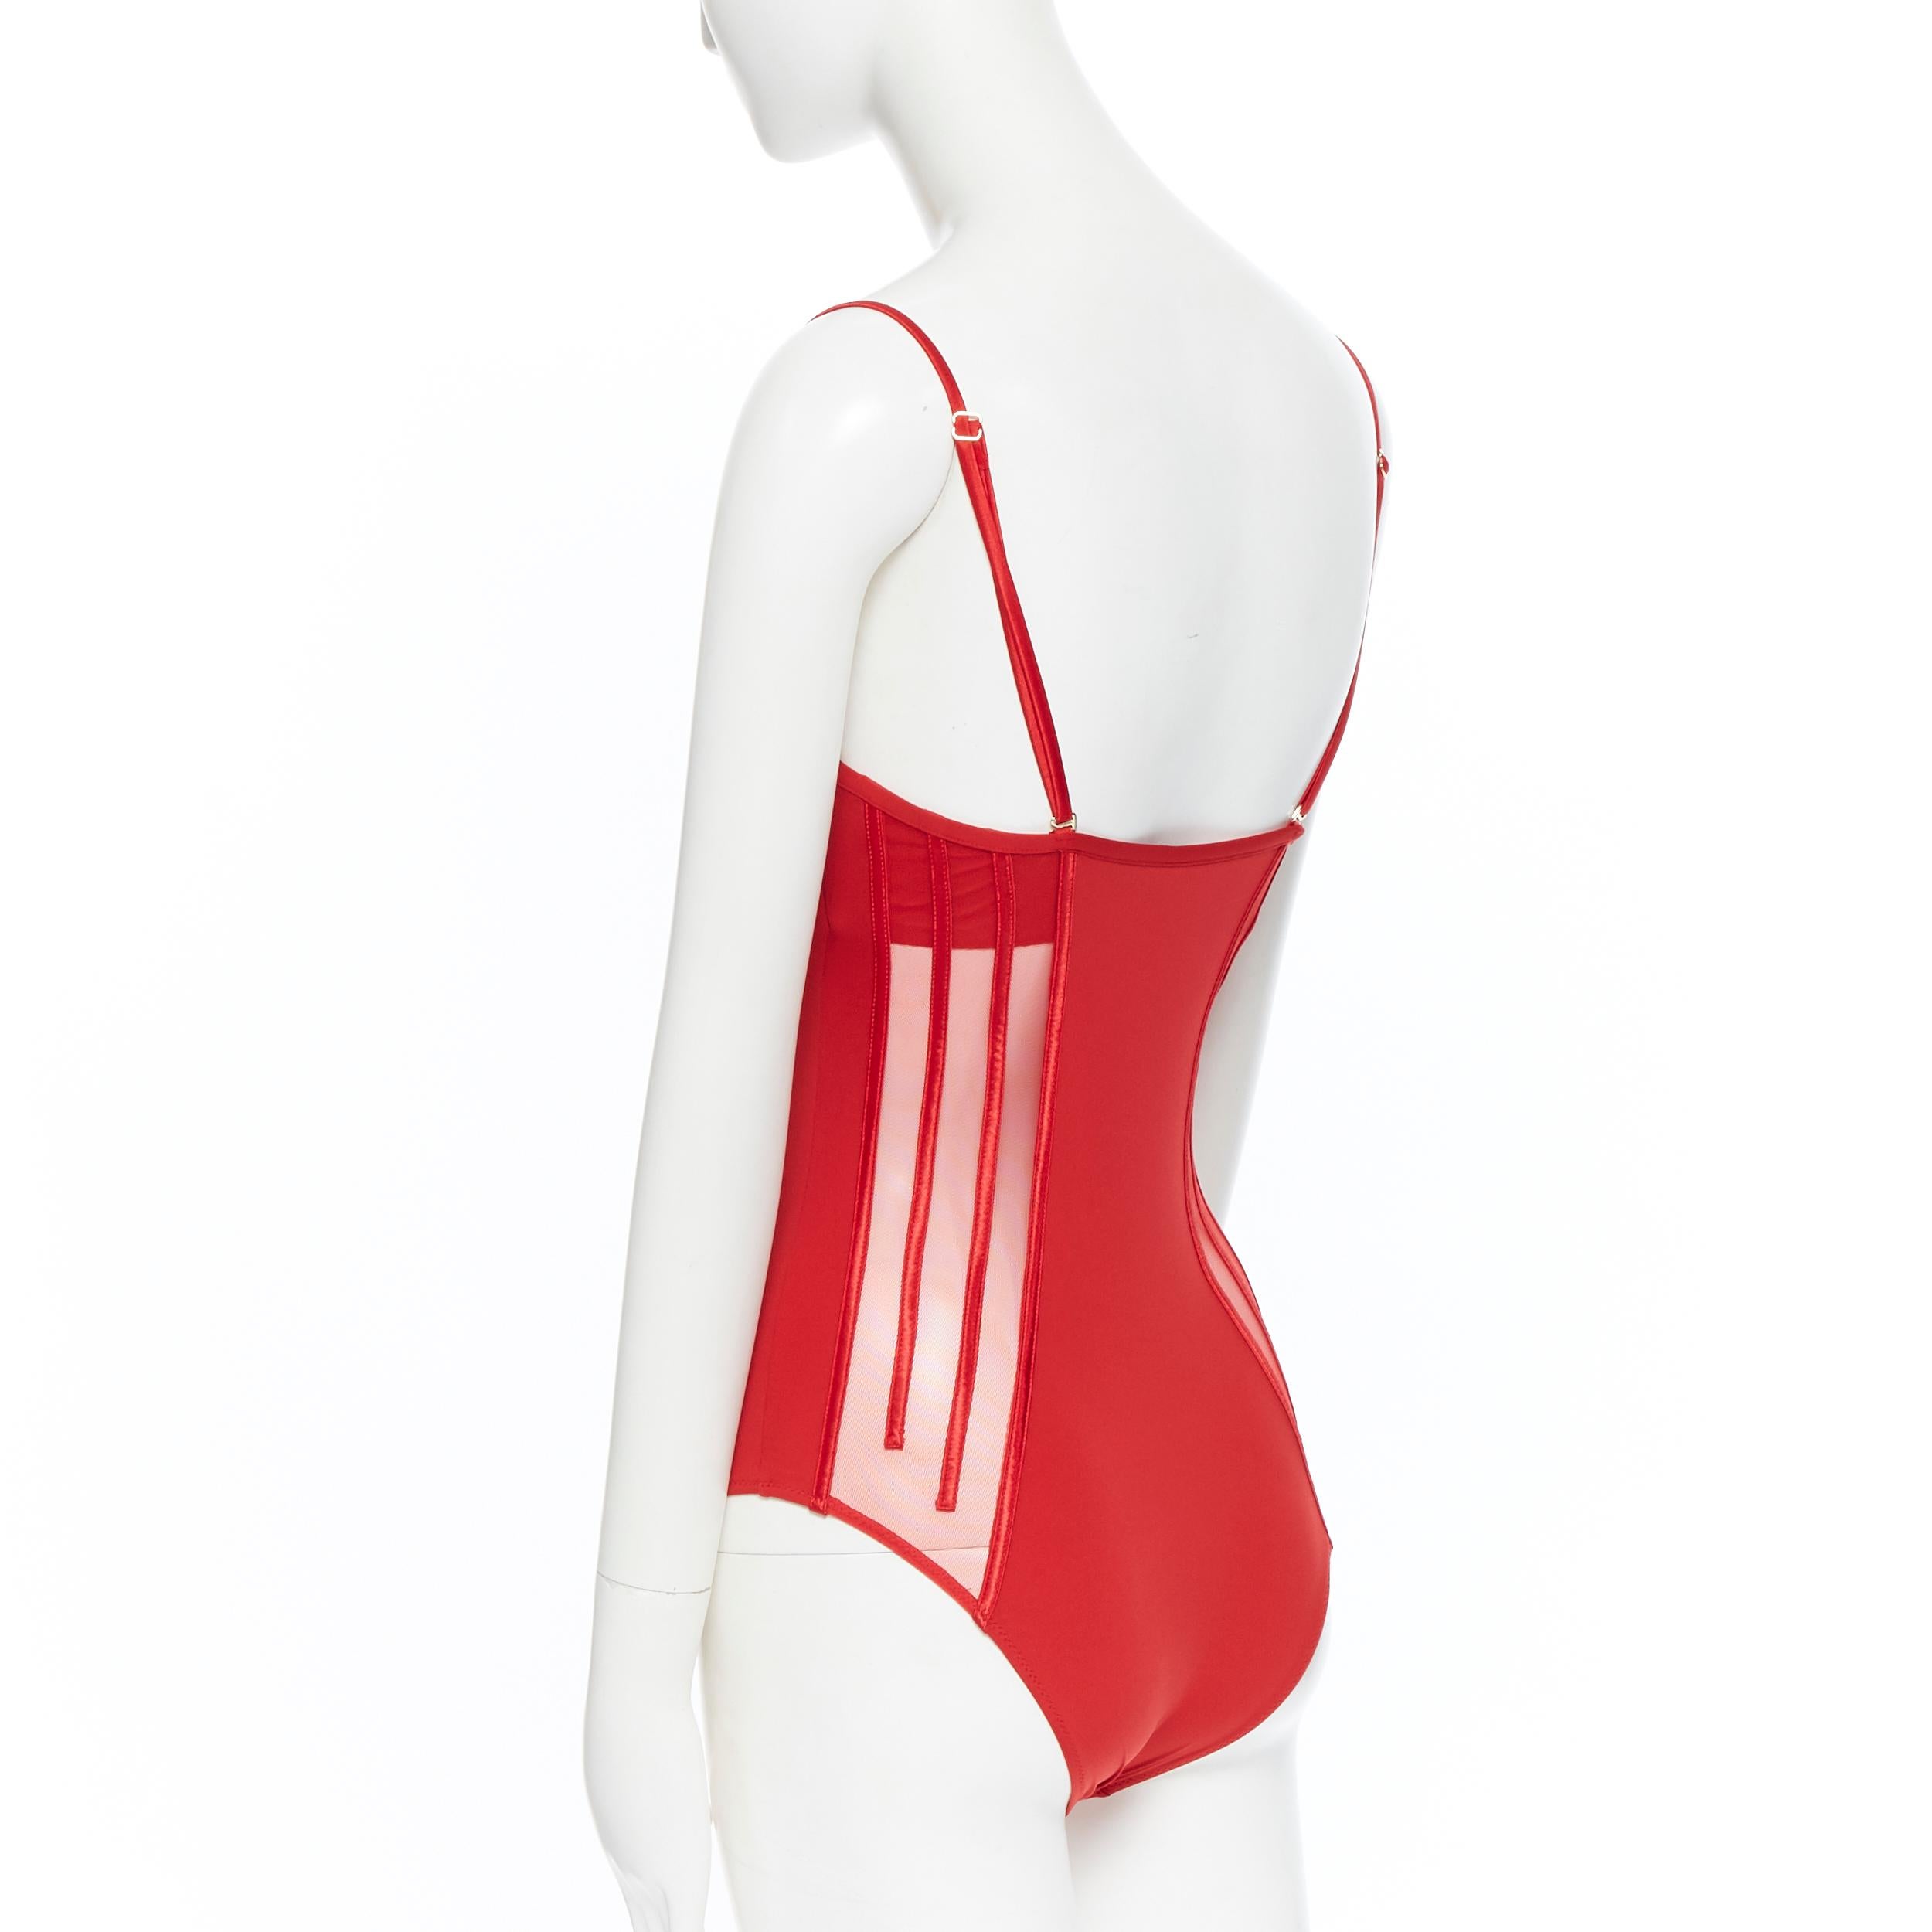 Women's new LA PERLA Graphique Couture red boned sheer body monokini swimsuit IT44A M